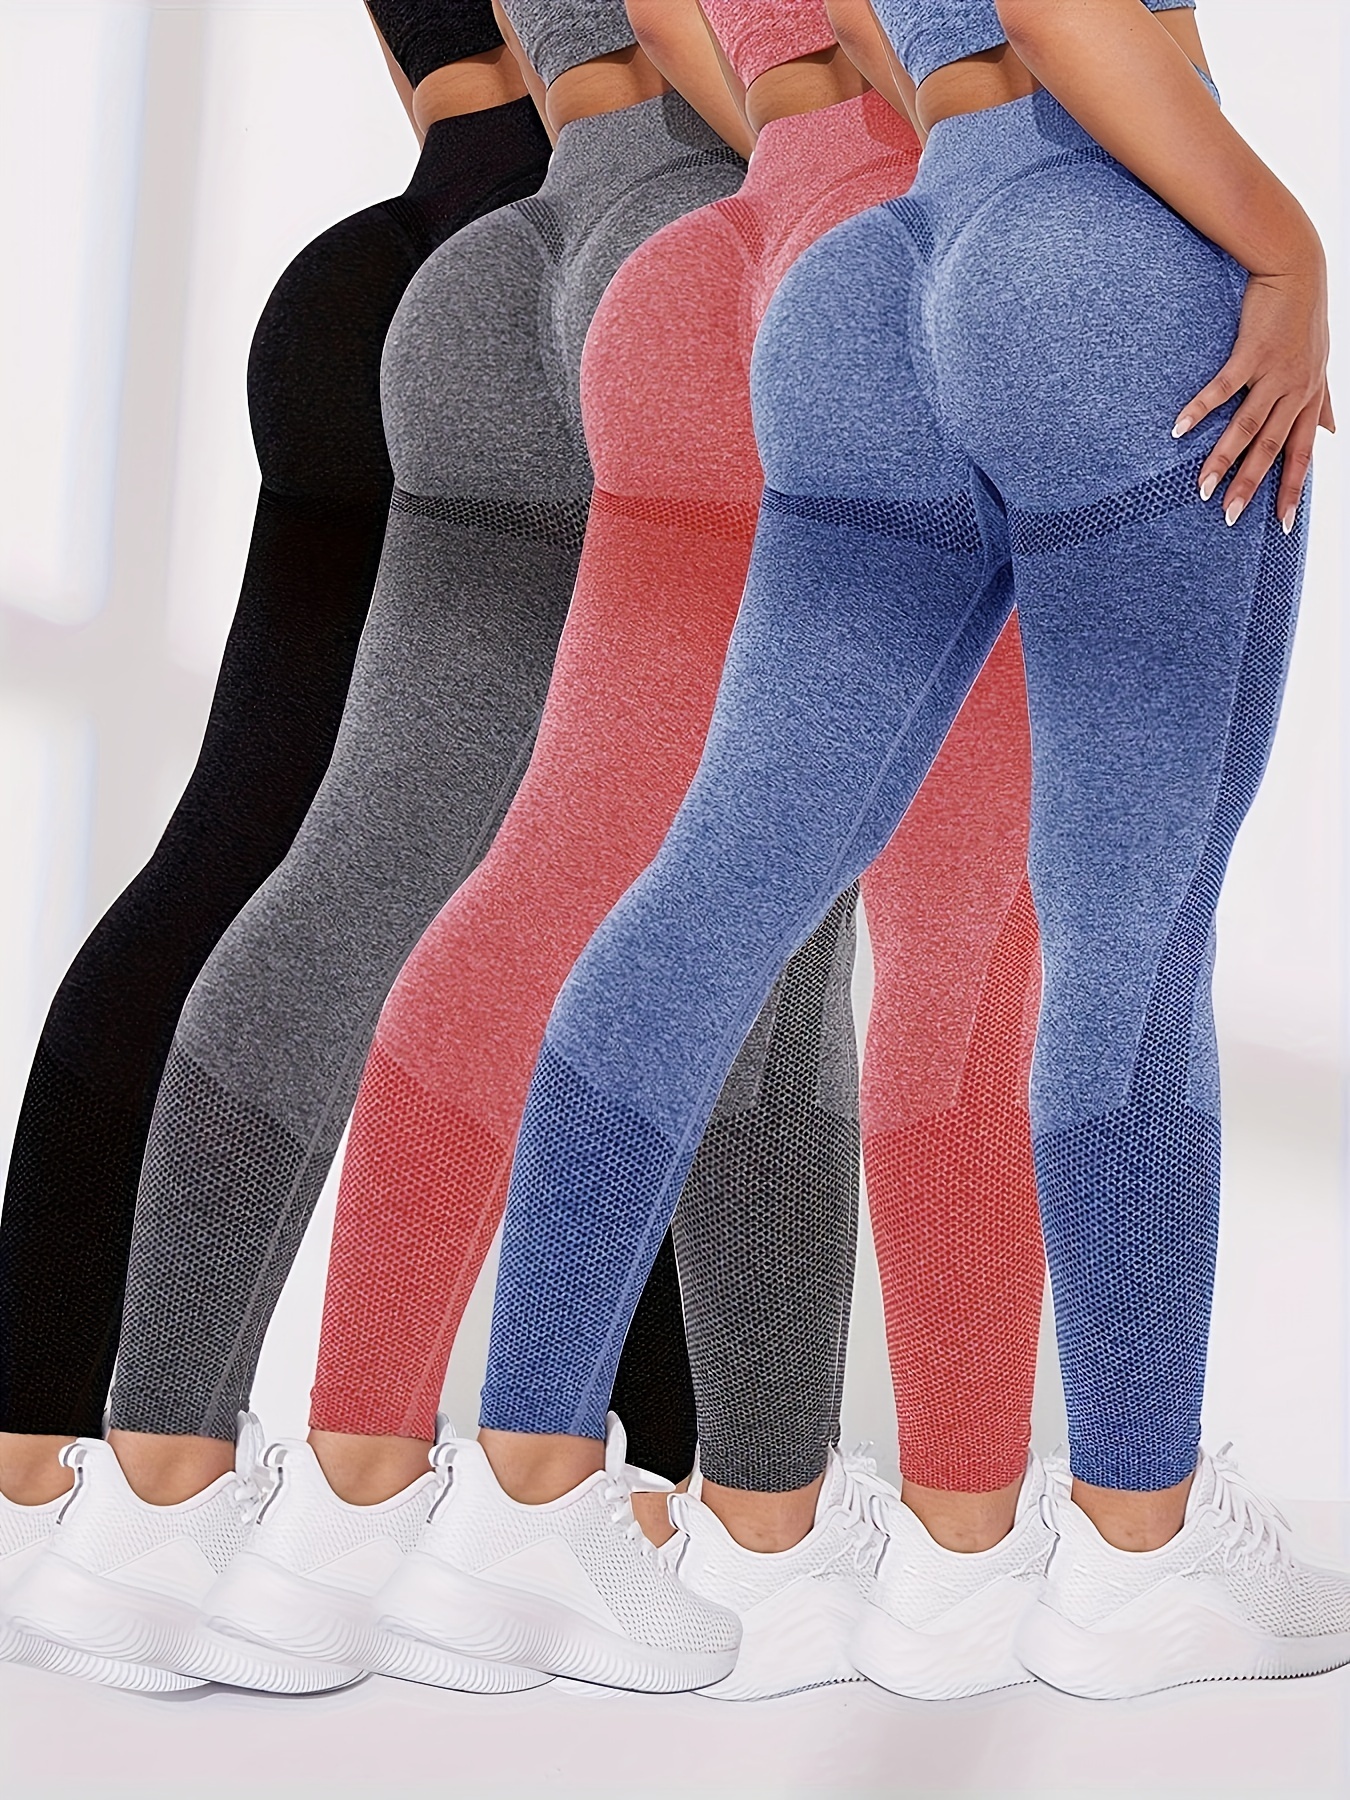 Ladies Yoga Pants Hip Push Up Gym Seamless Workout Running Trousers